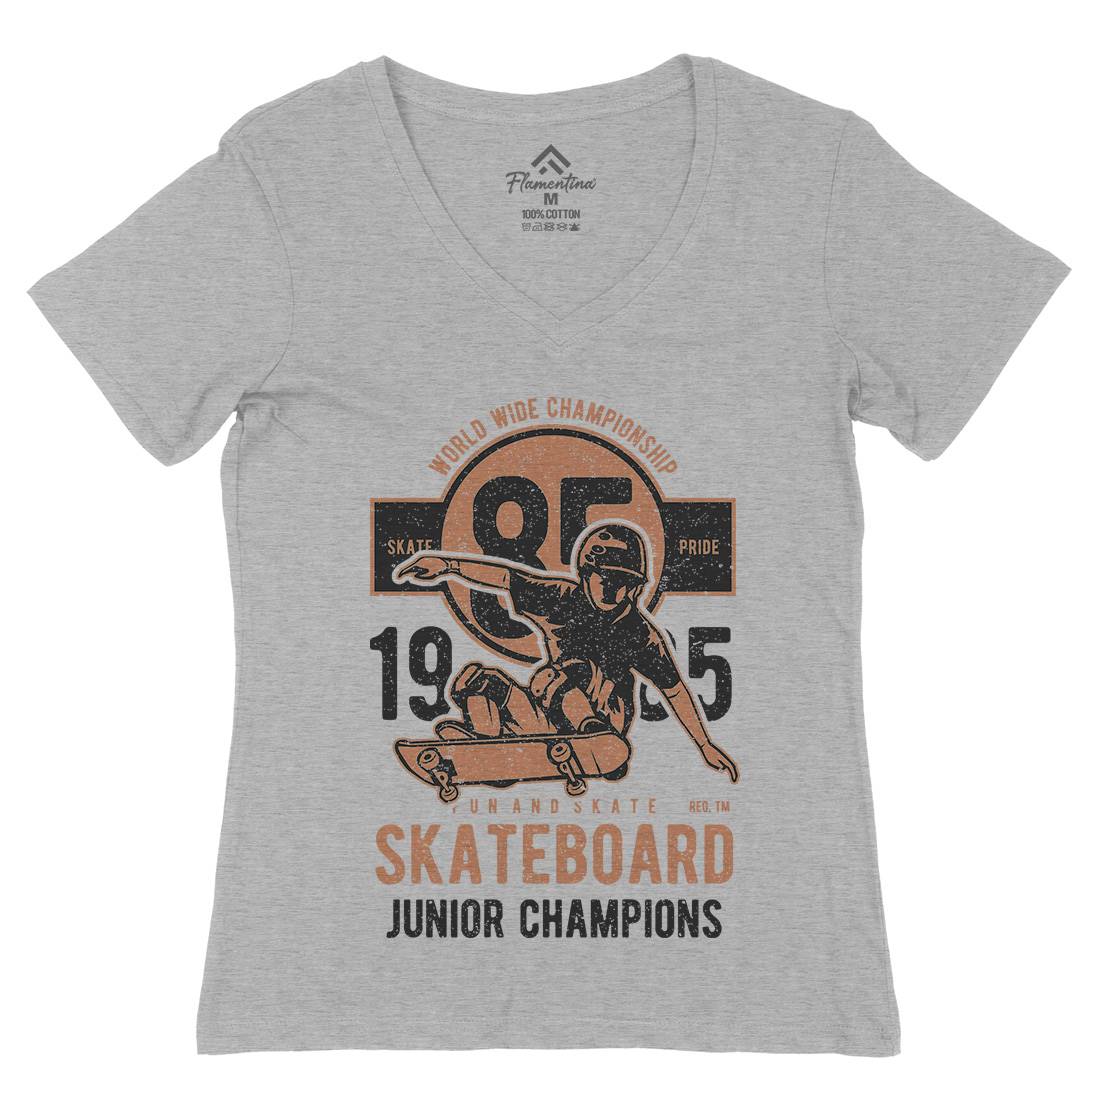 Skateboard Junior Champions Womens Organic V-Neck T-Shirt Skate A755